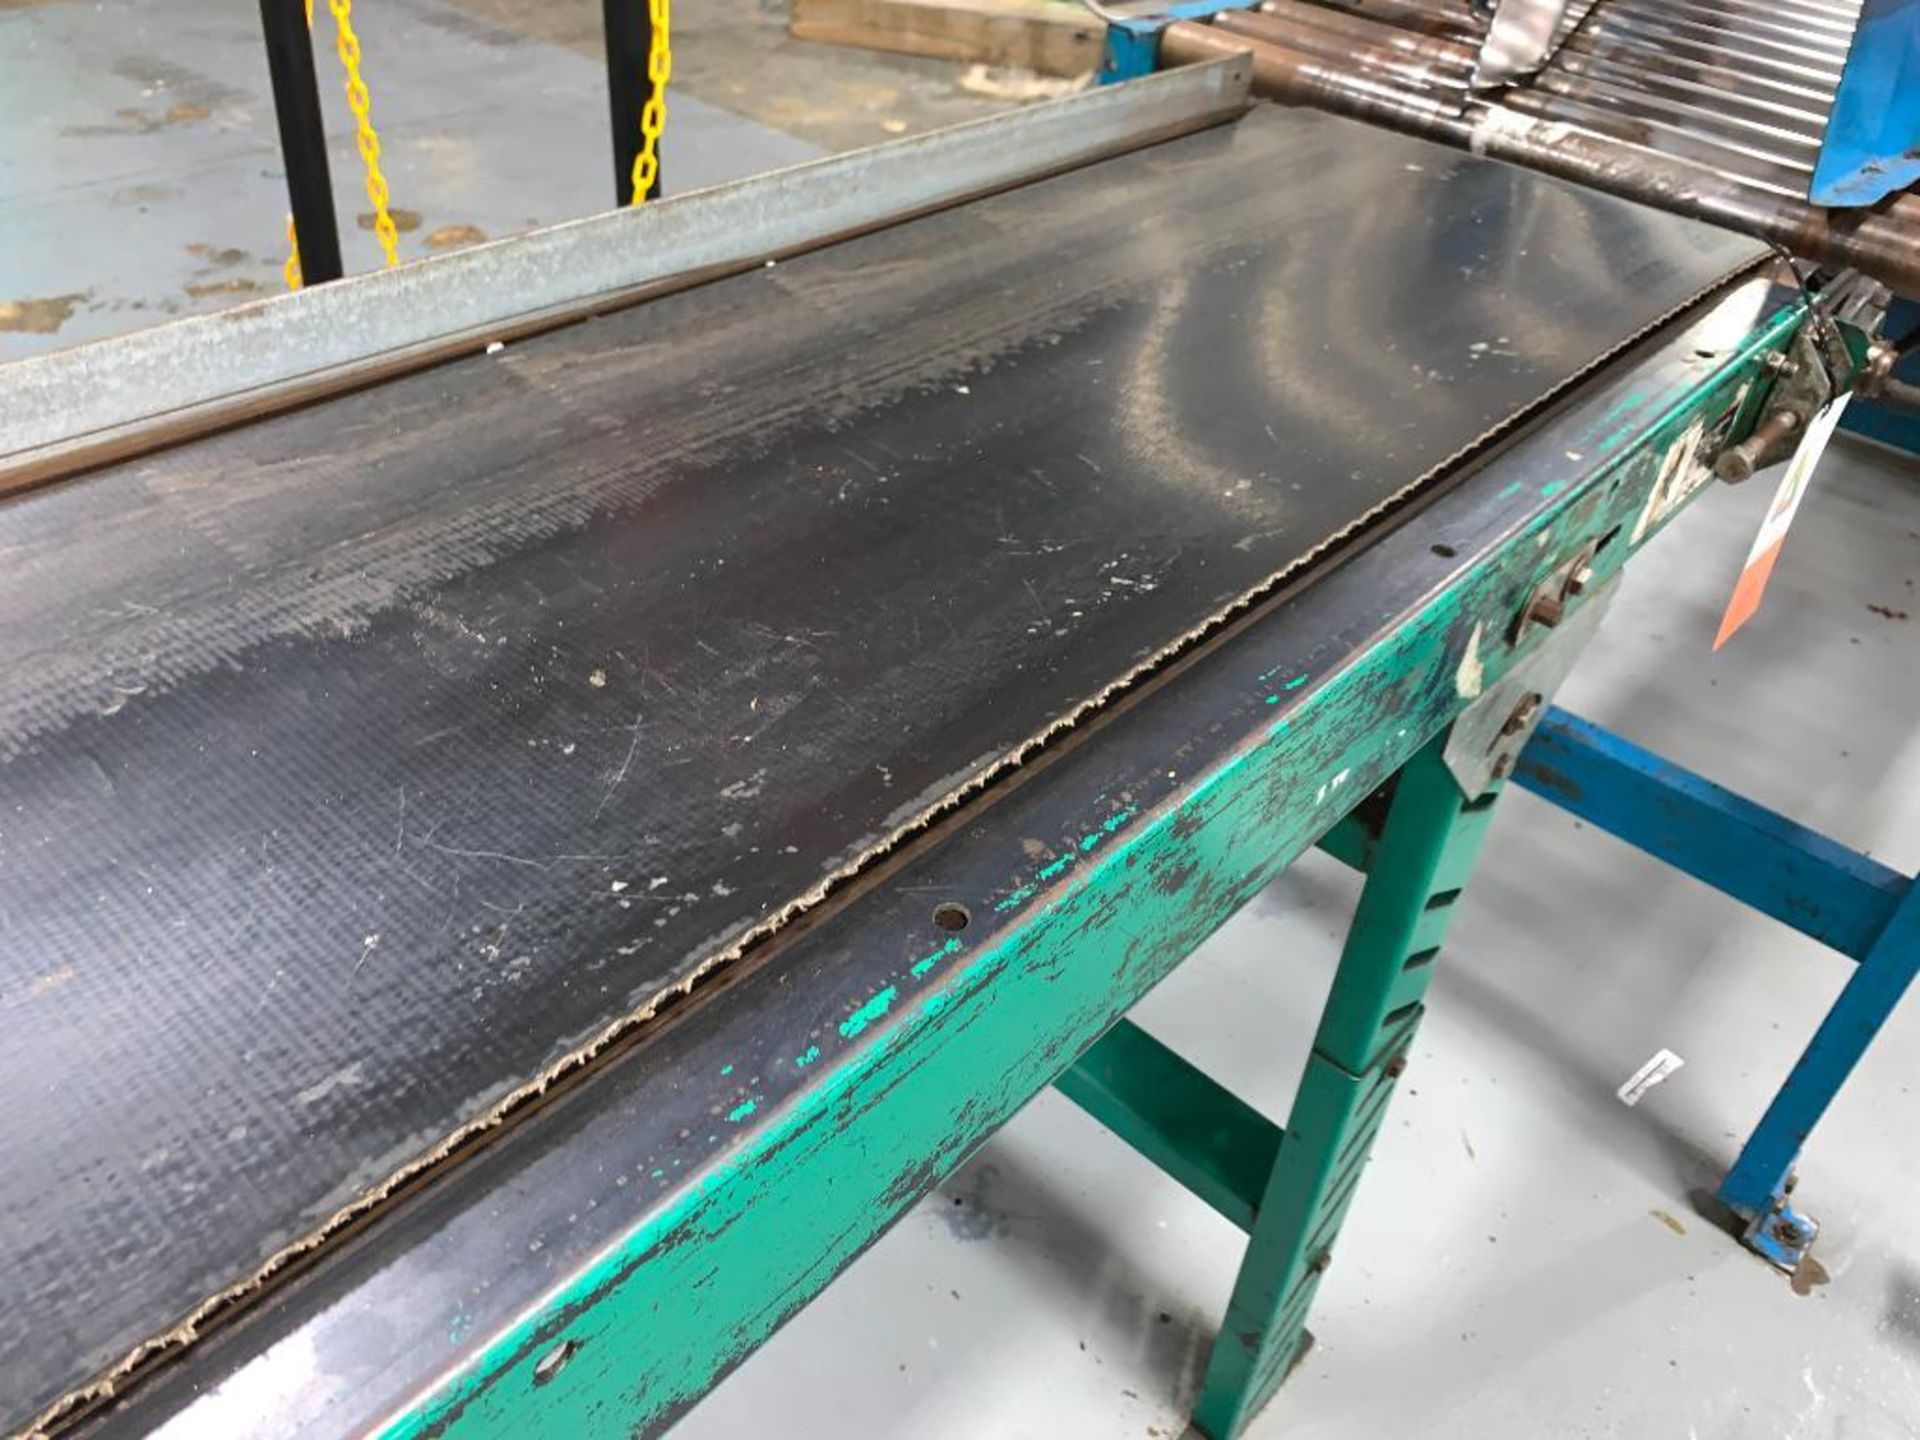 Hytrol mild steel conveyor, 126 in. x 14 in. x 36 in., black rubber belT - Image 4 of 7